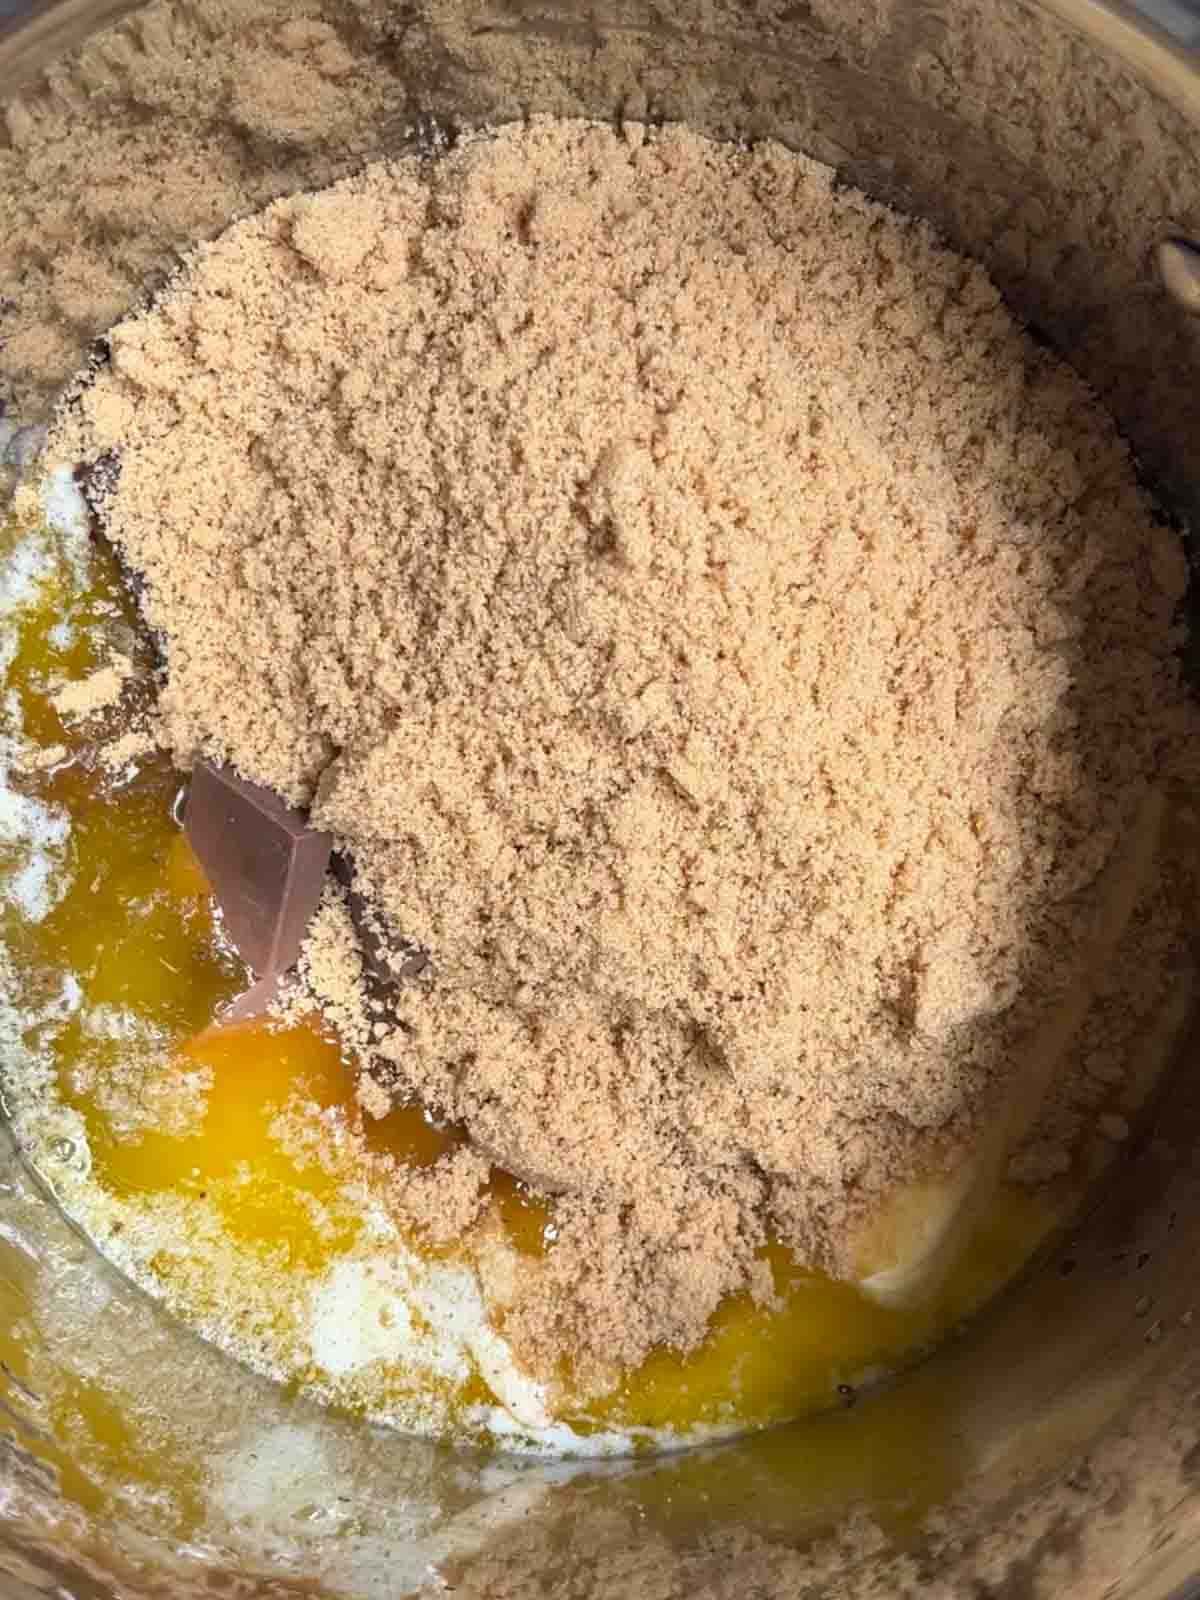 Raw ingredients in a pan for chocolate orange brownies.